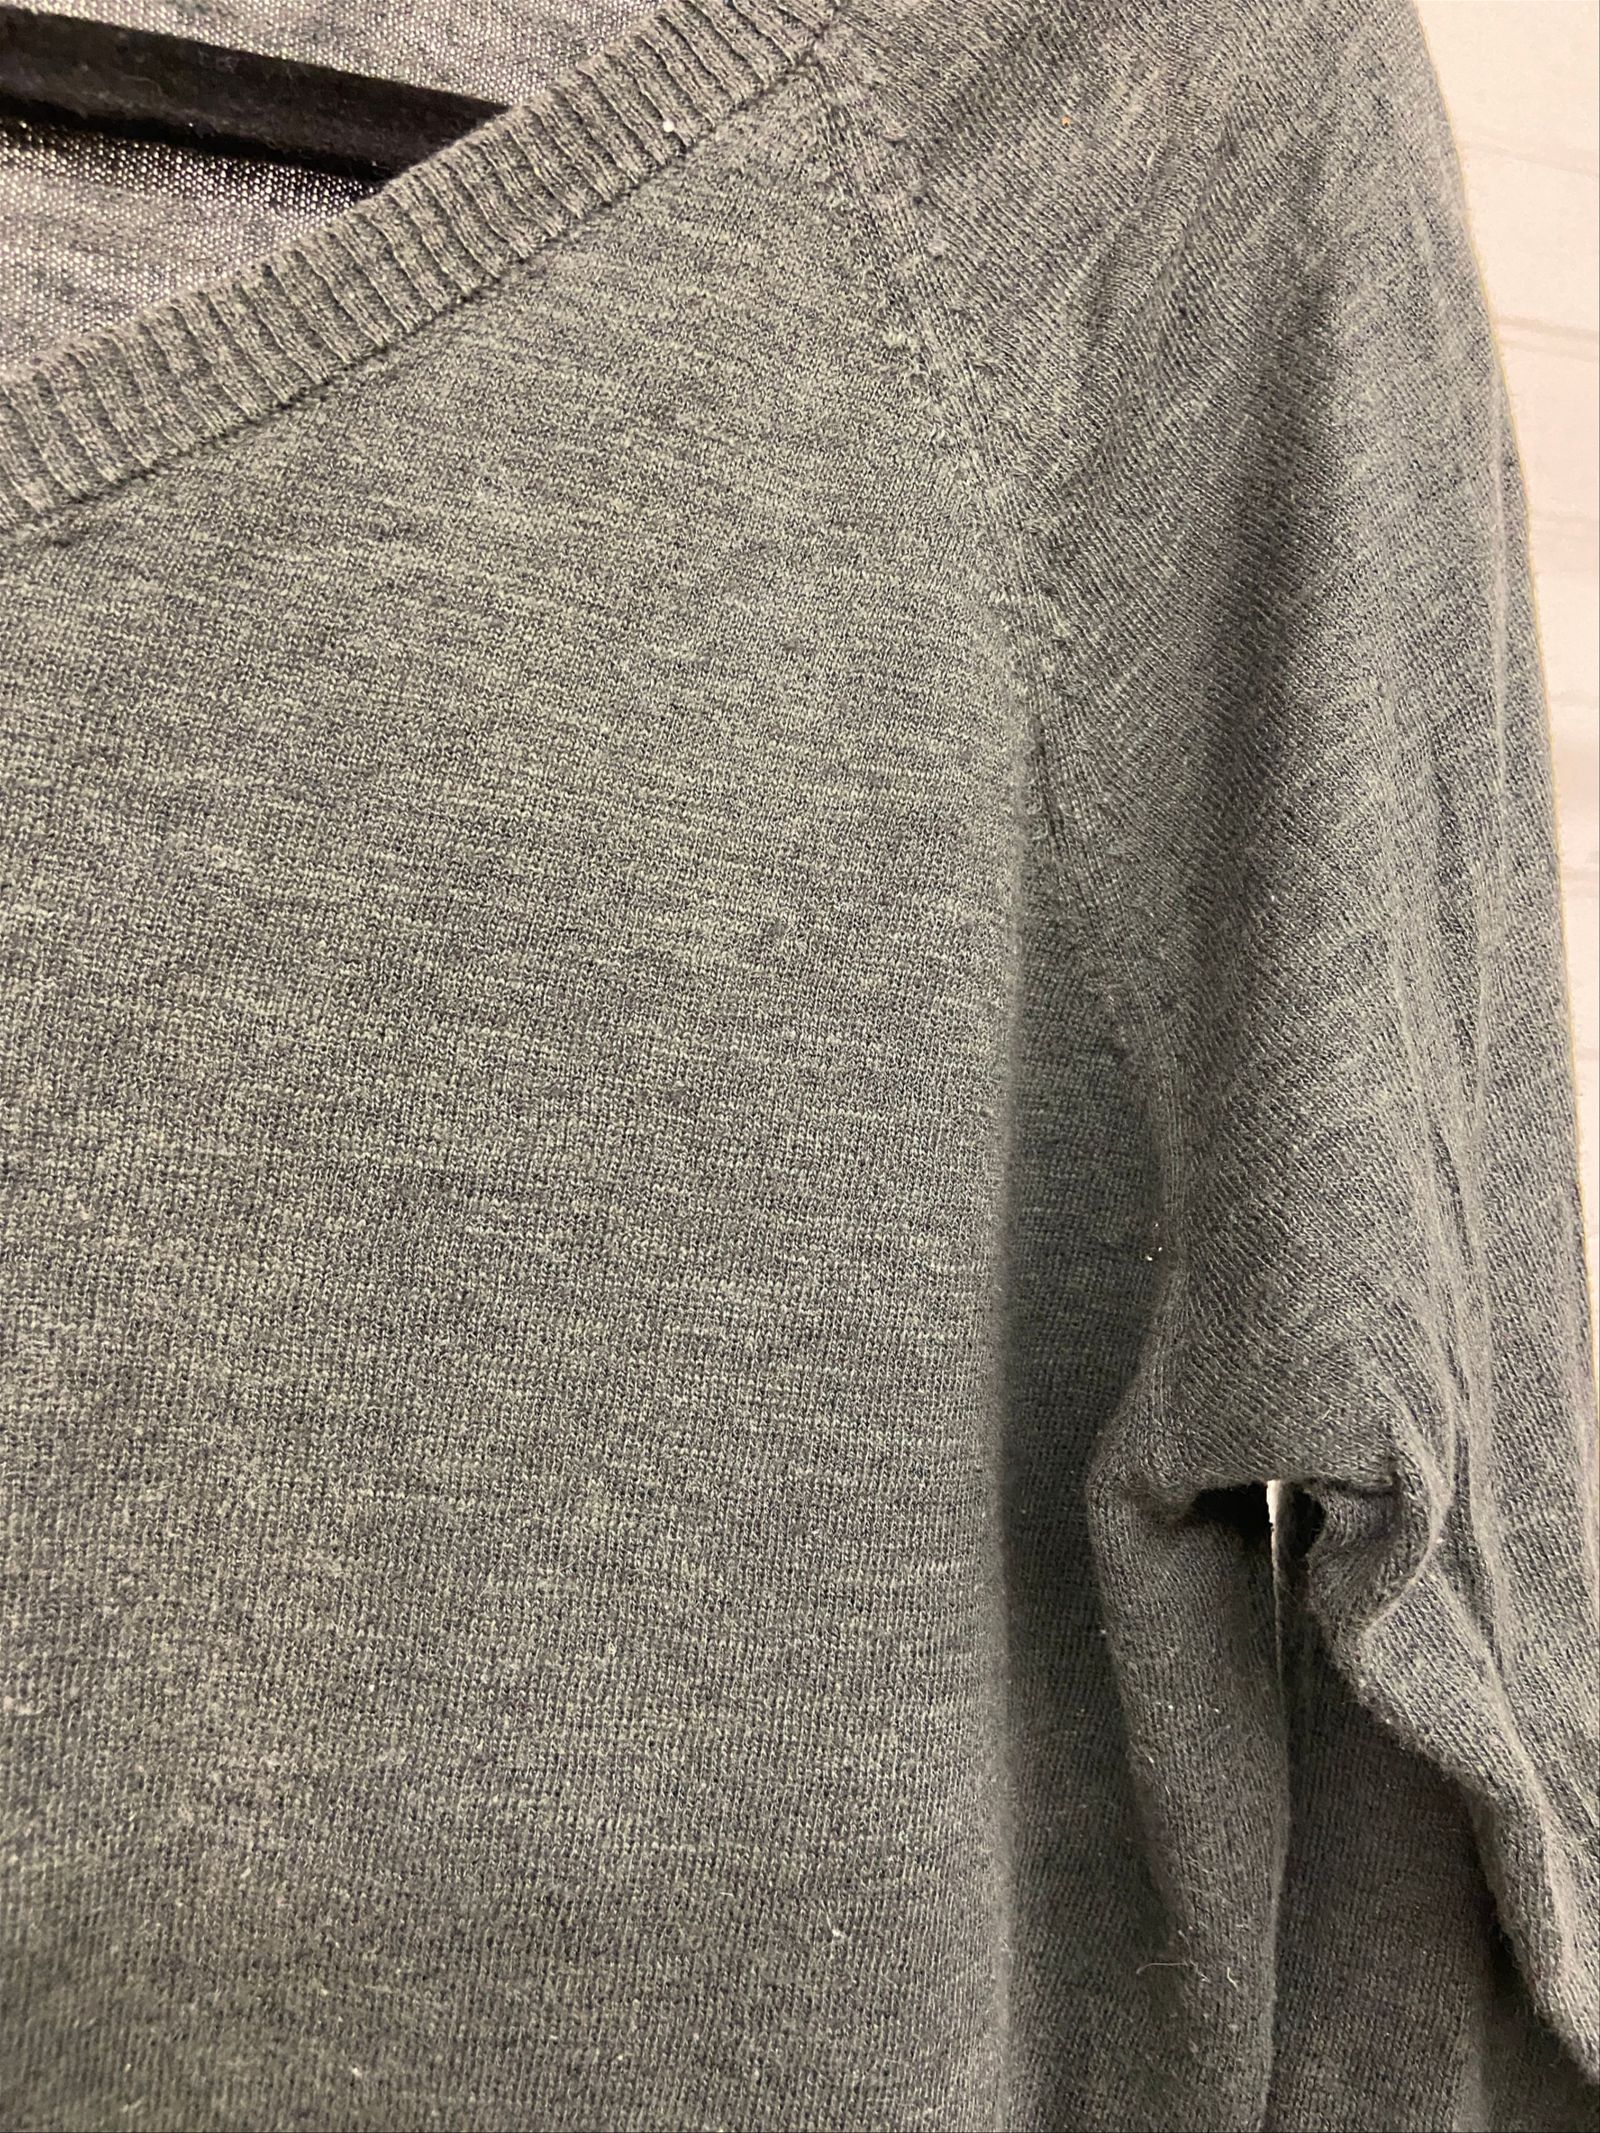 Sass and Bide Moda V Neck Knit Top in Grey